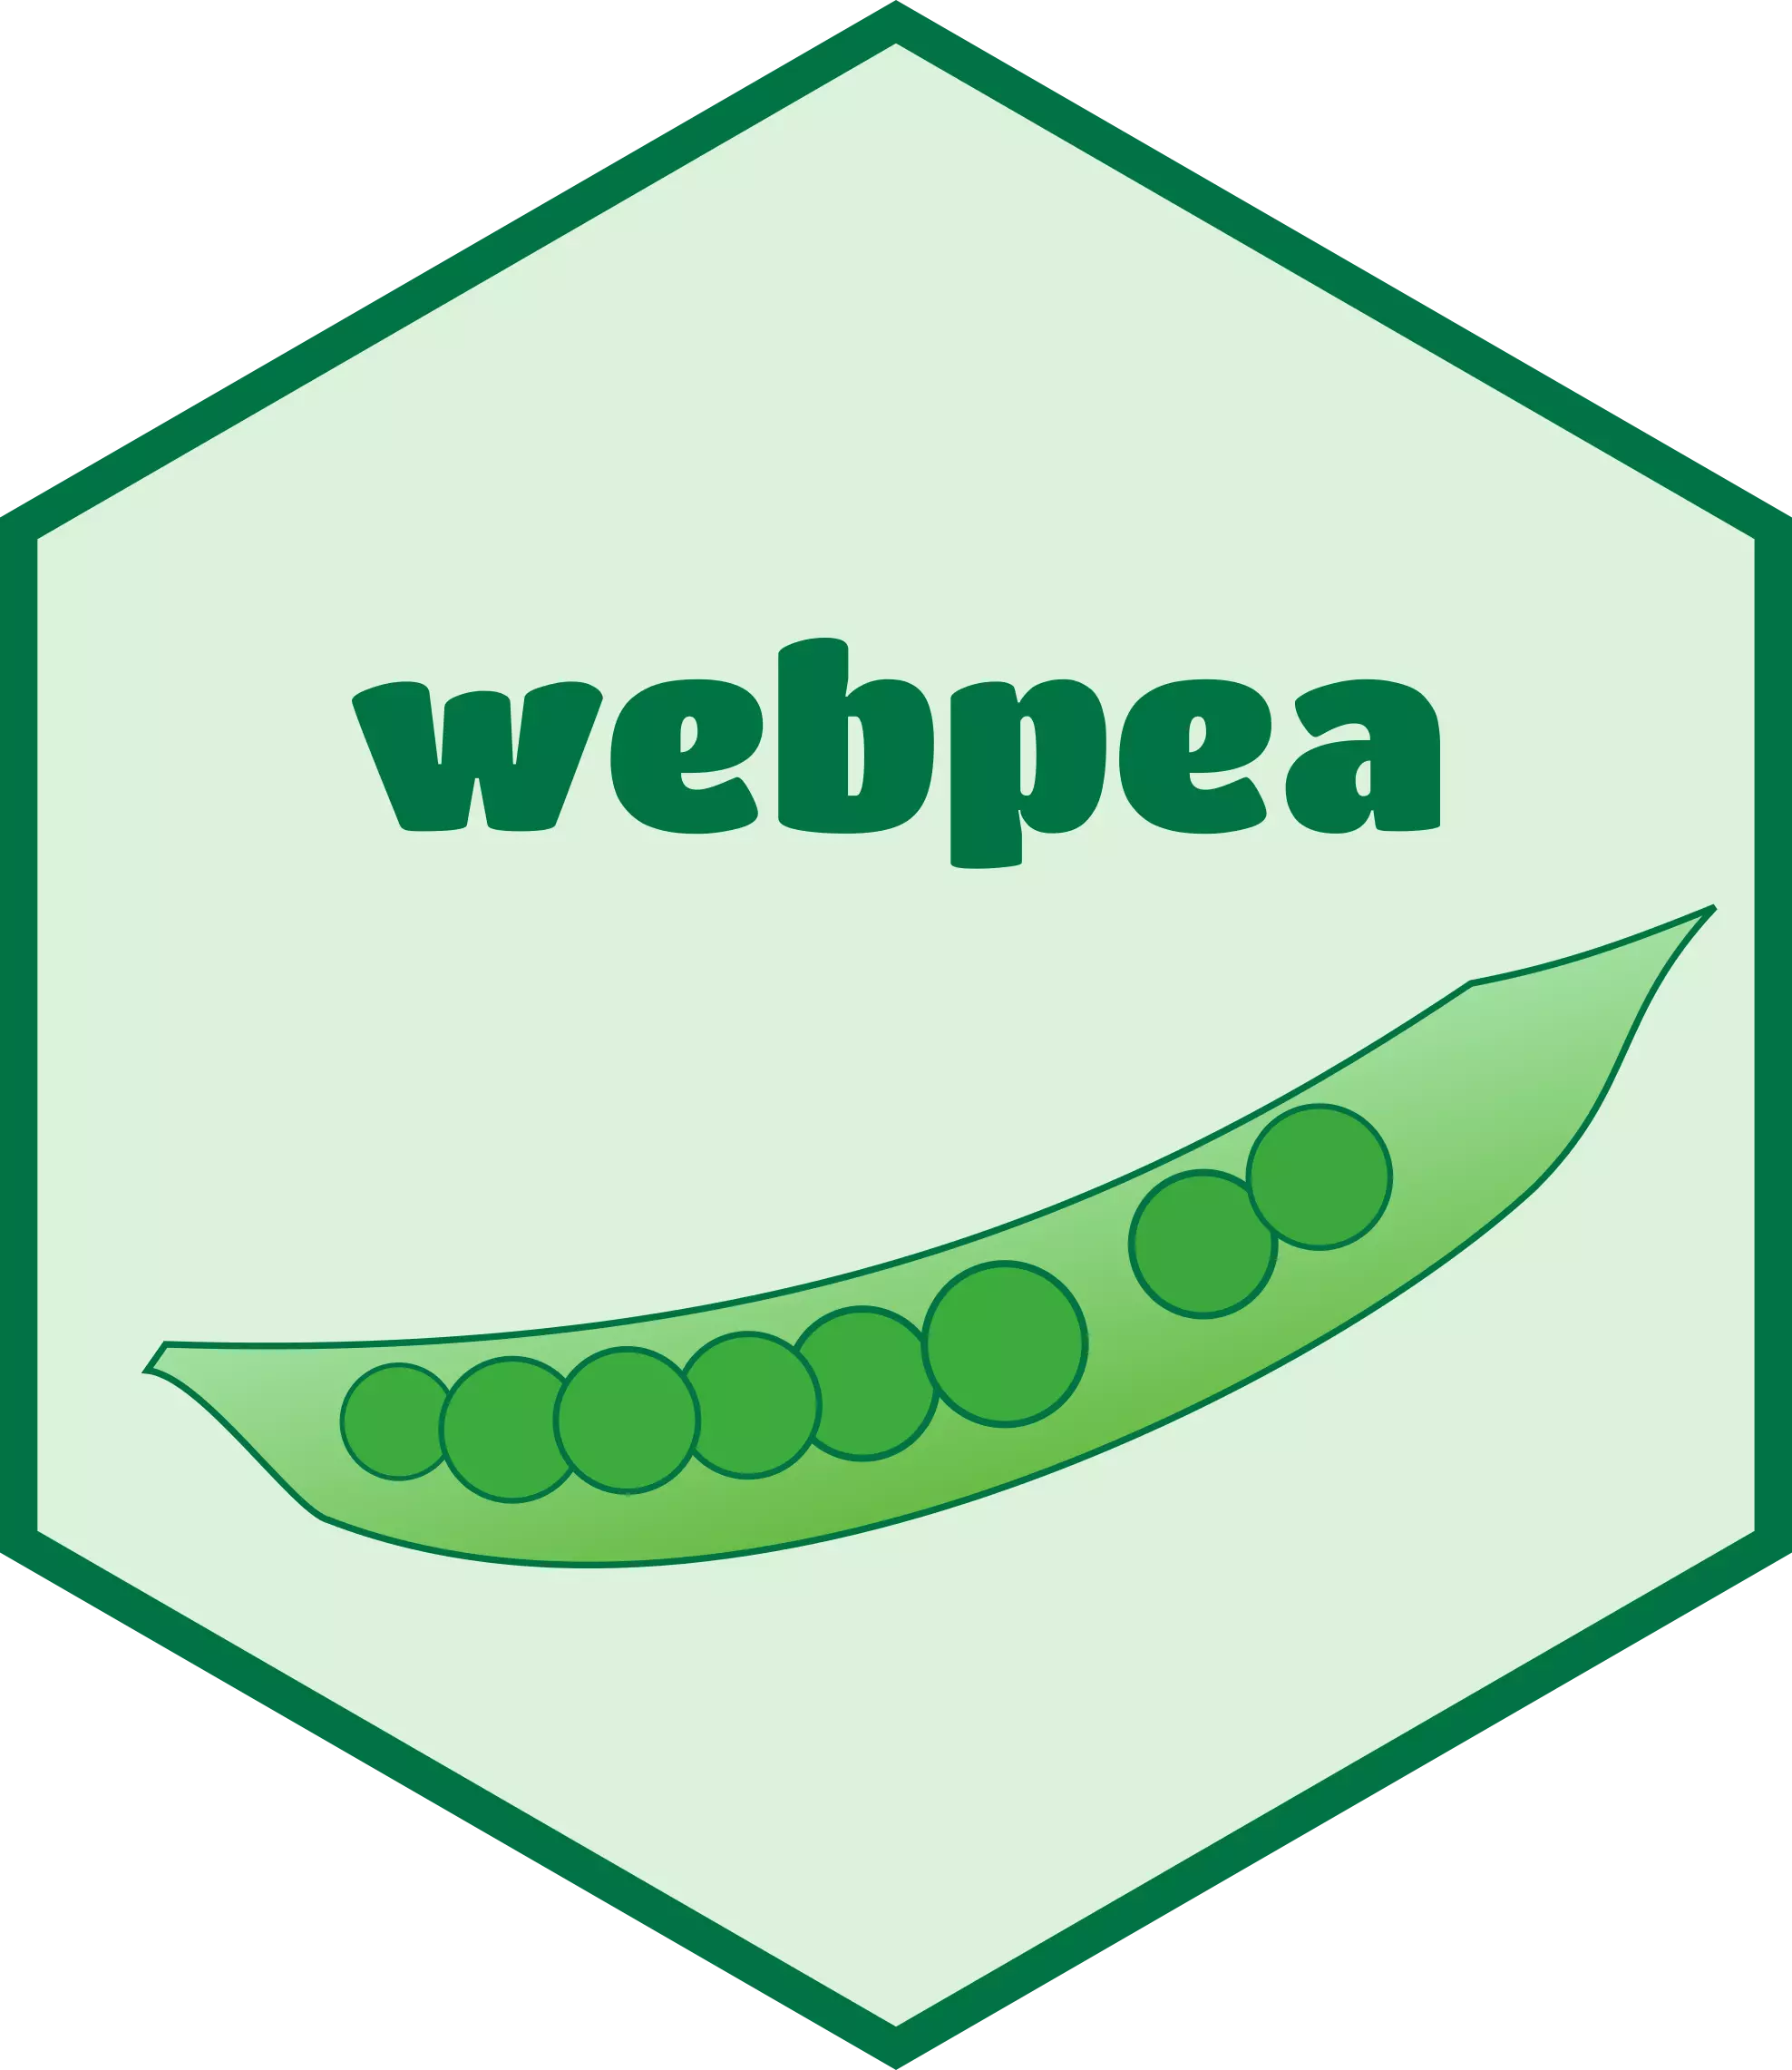 The webpea package